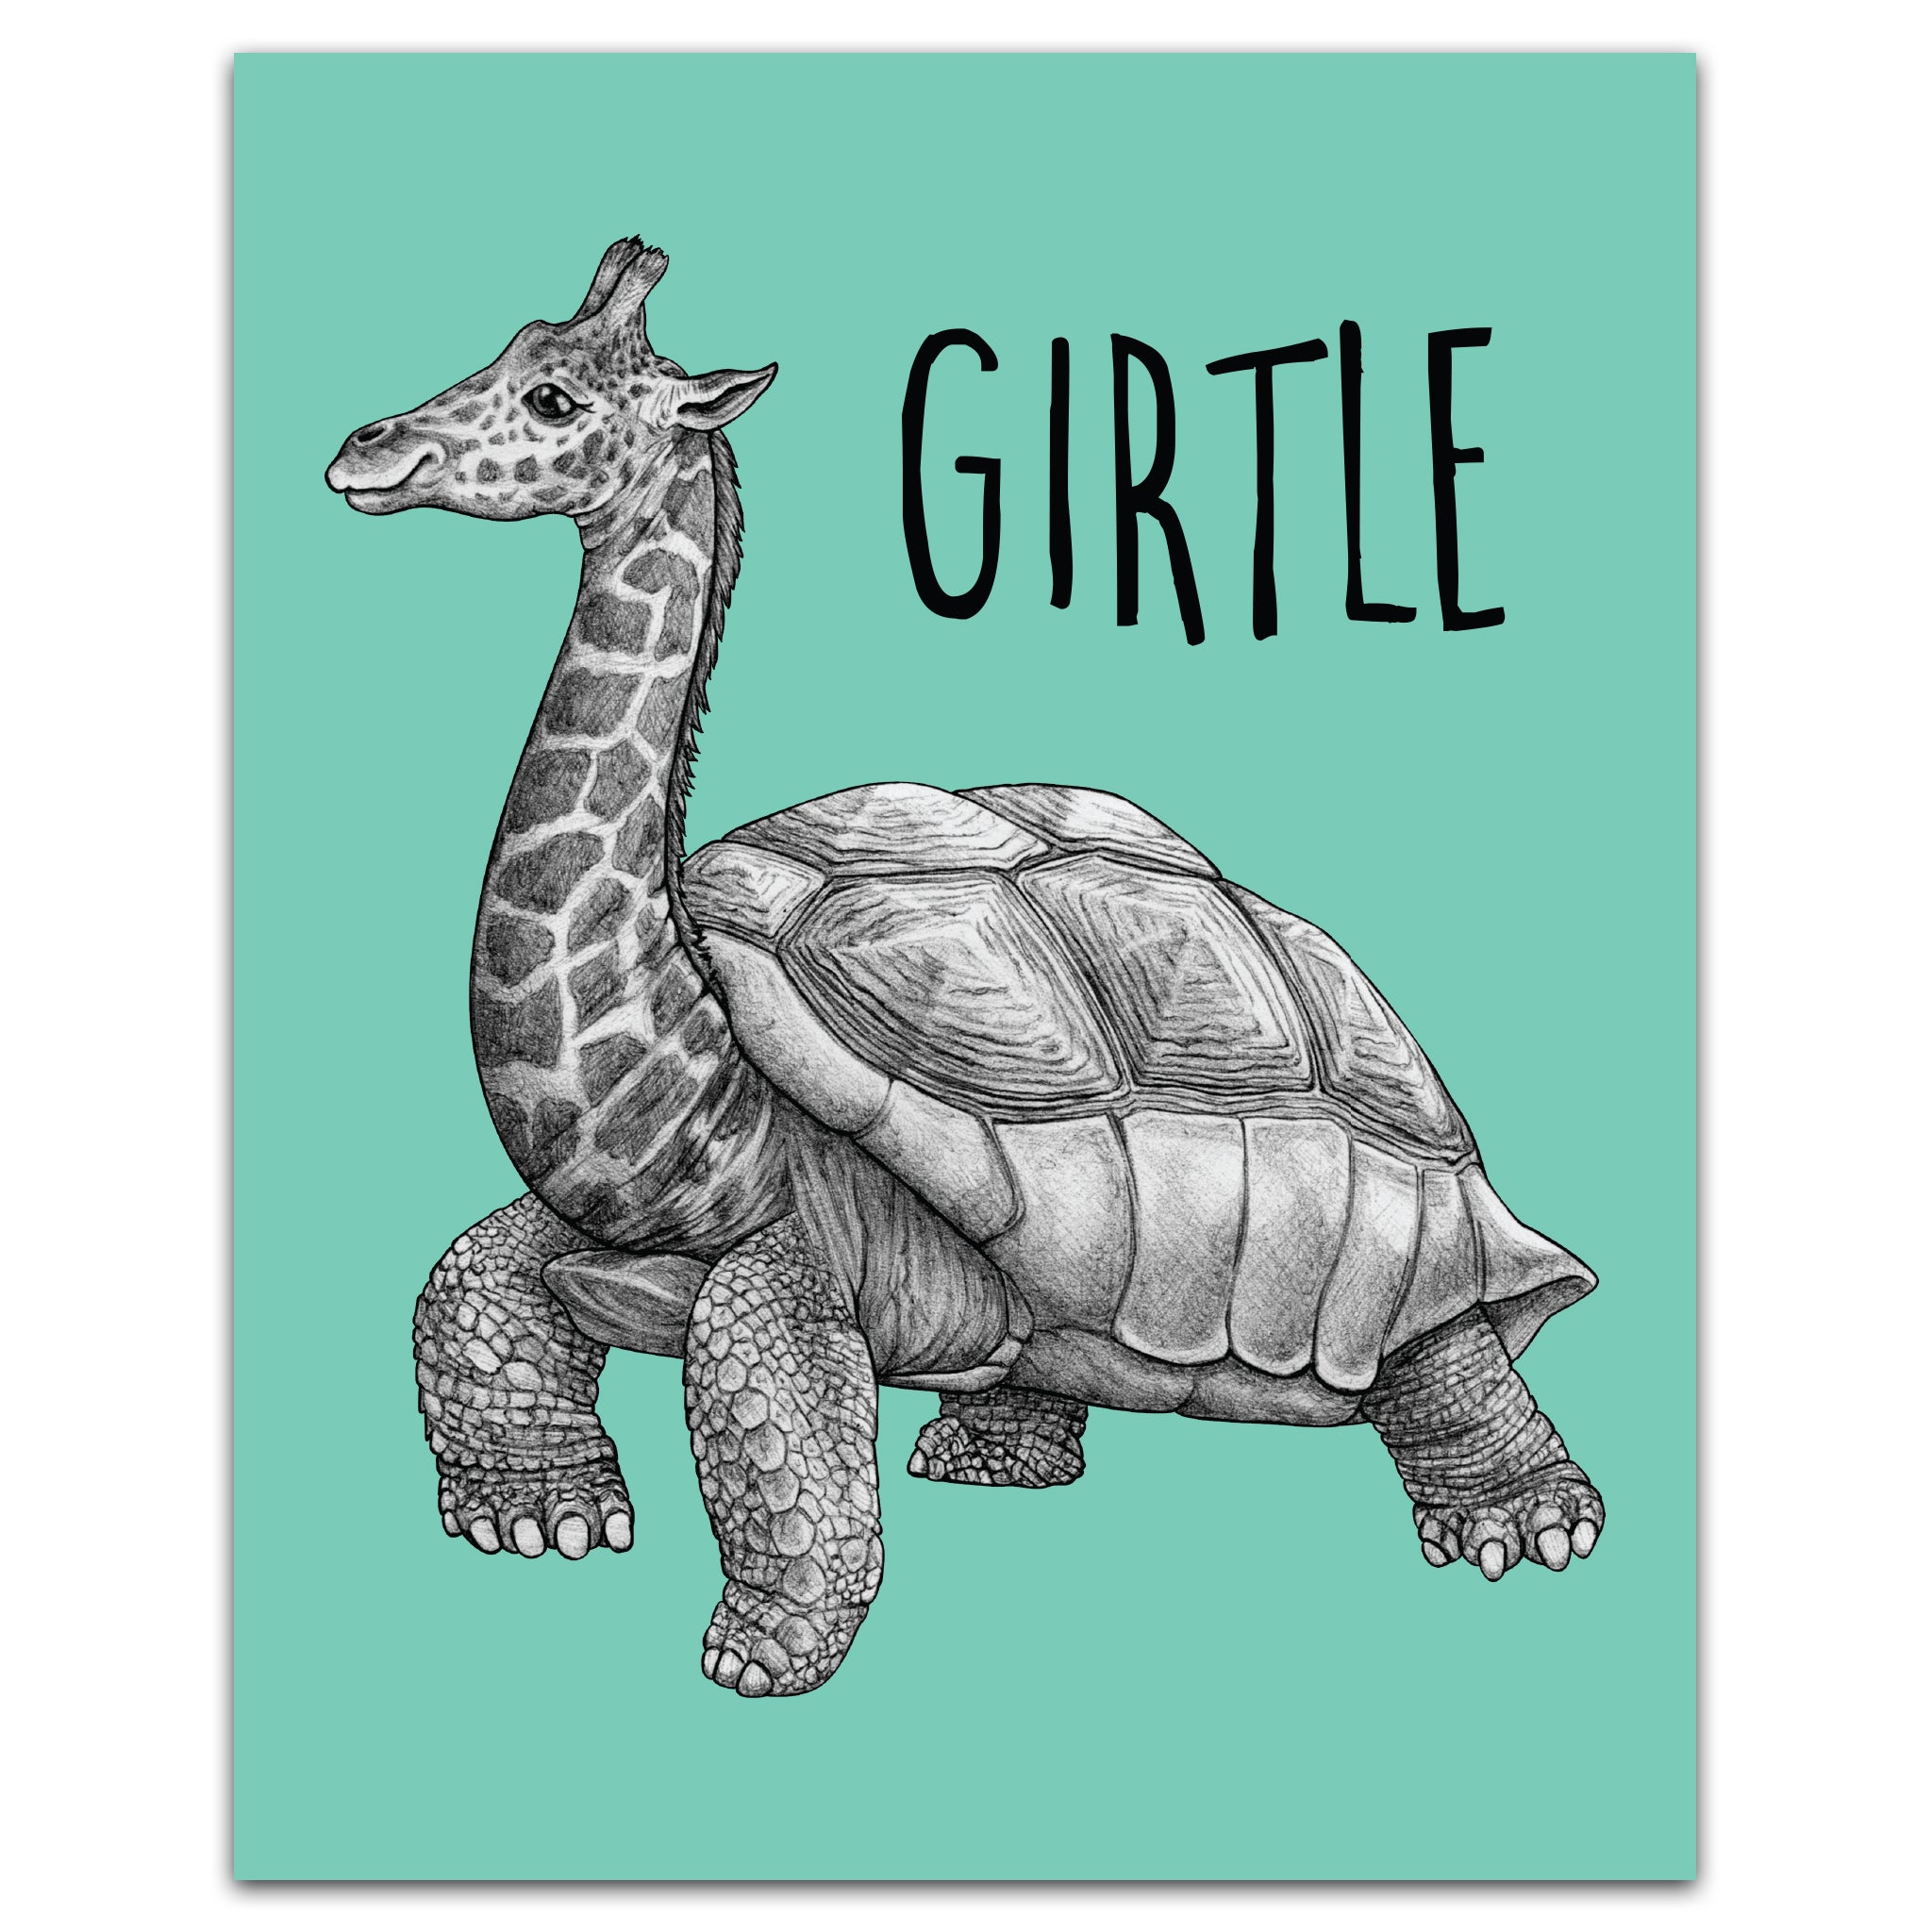 Girtle | Giraffe + Turtle Hybrid Animal | 8x10" Color Print